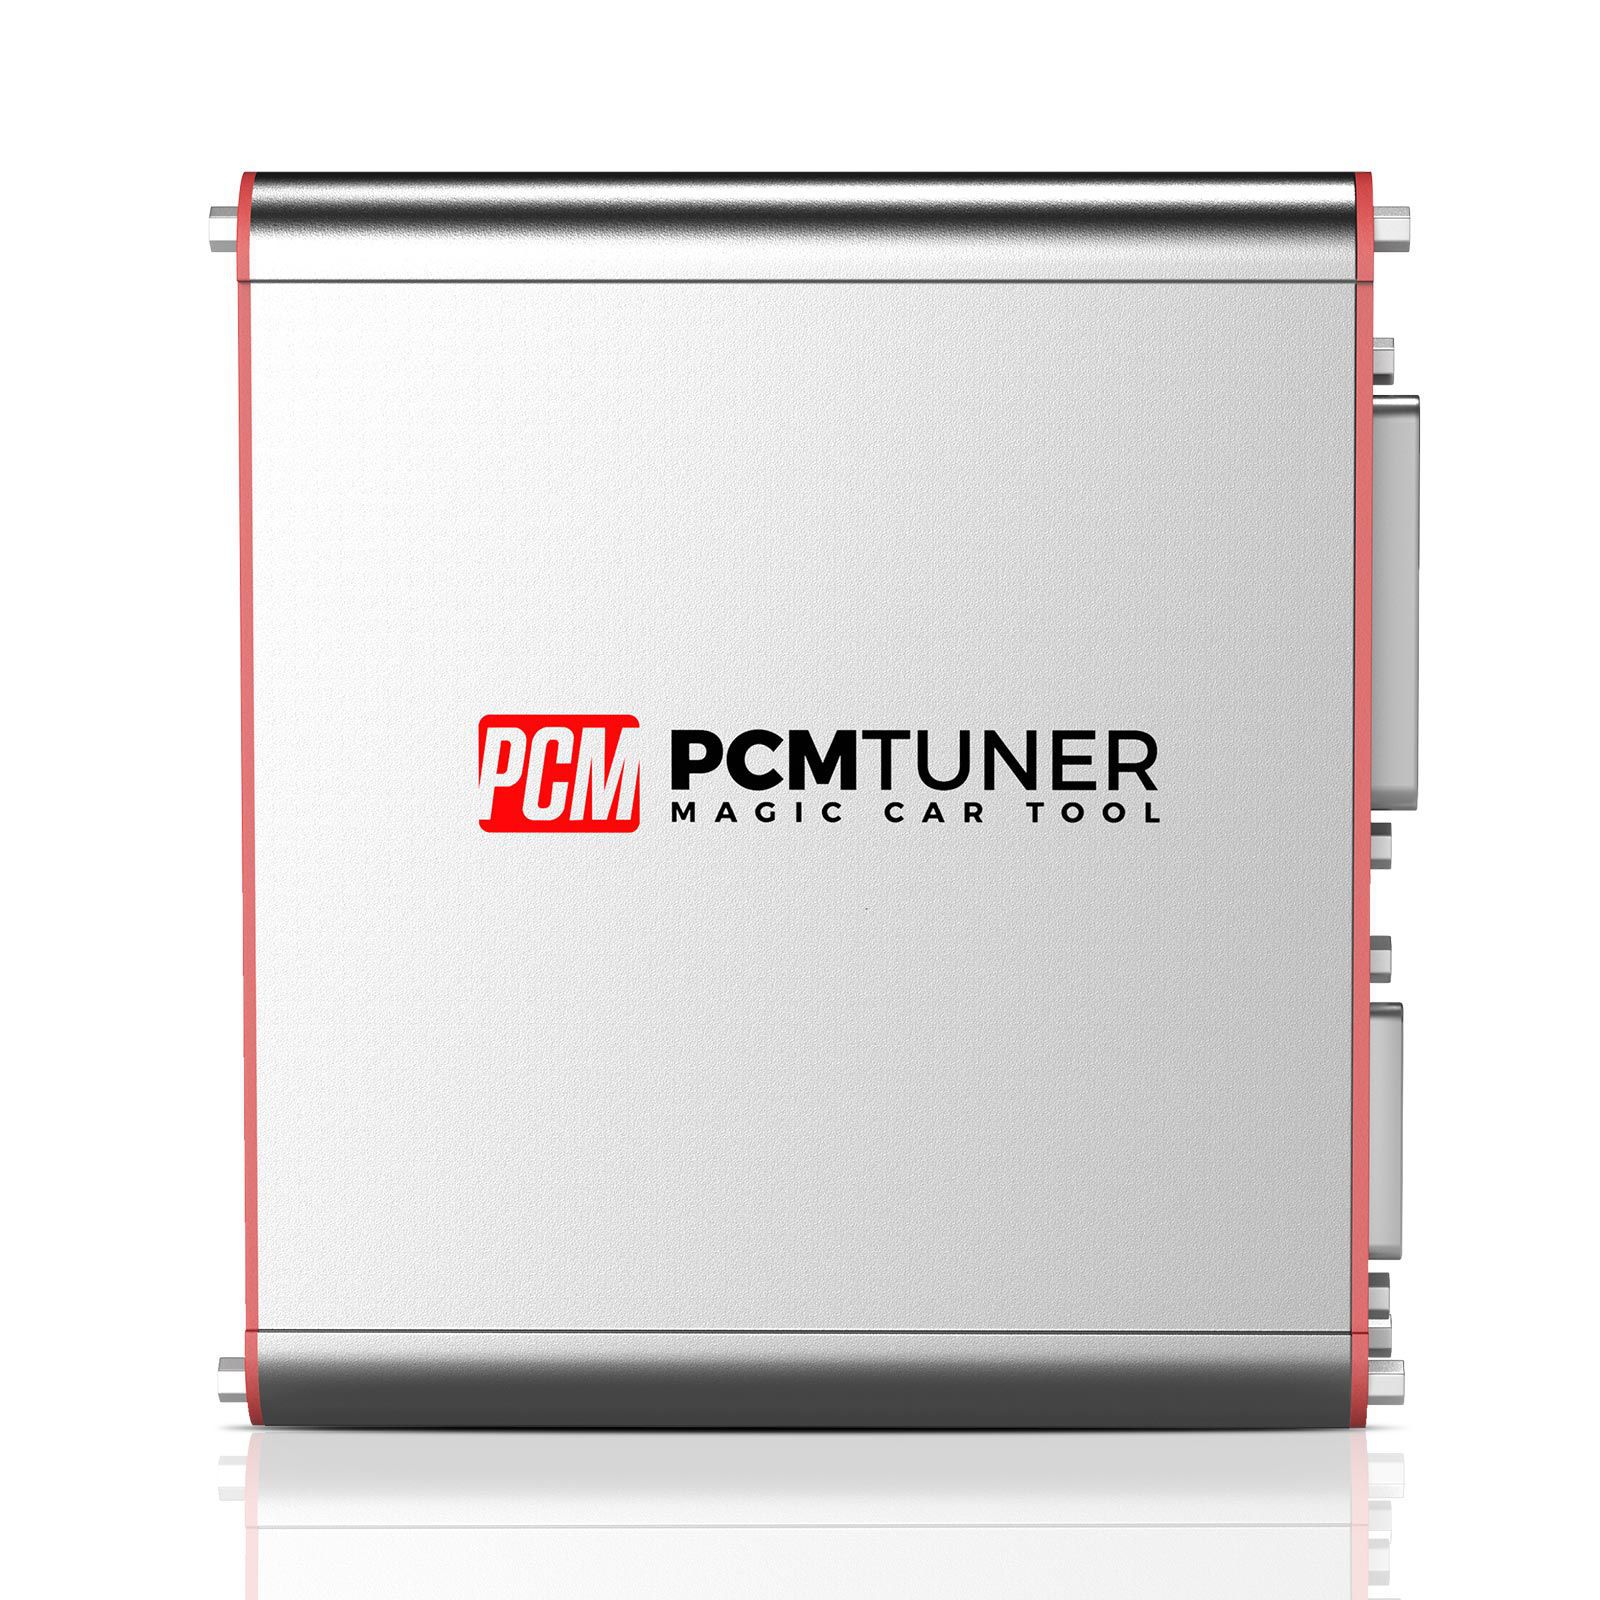 PCM Tuner ECU programmeur + fetrotech outil ECU programmeur argent support mg1 MD1 edc16 med9.1 Ecu